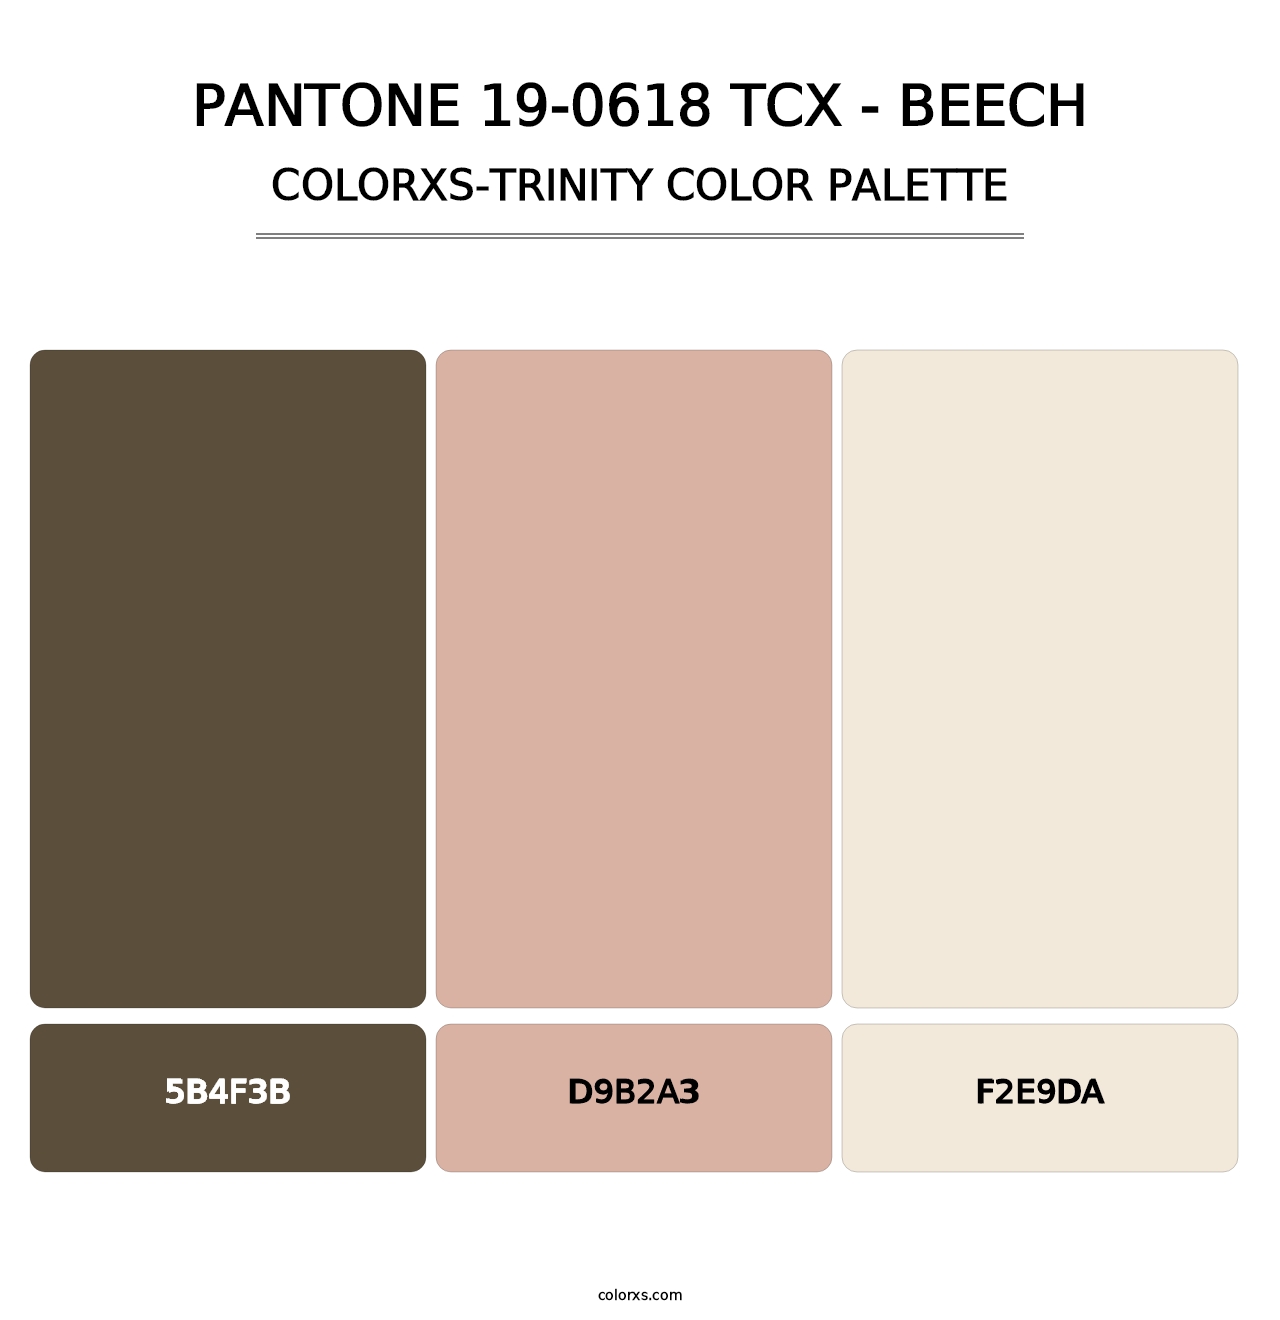 PANTONE 19-0618 TCX - Beech - Colorxs Trinity Palette